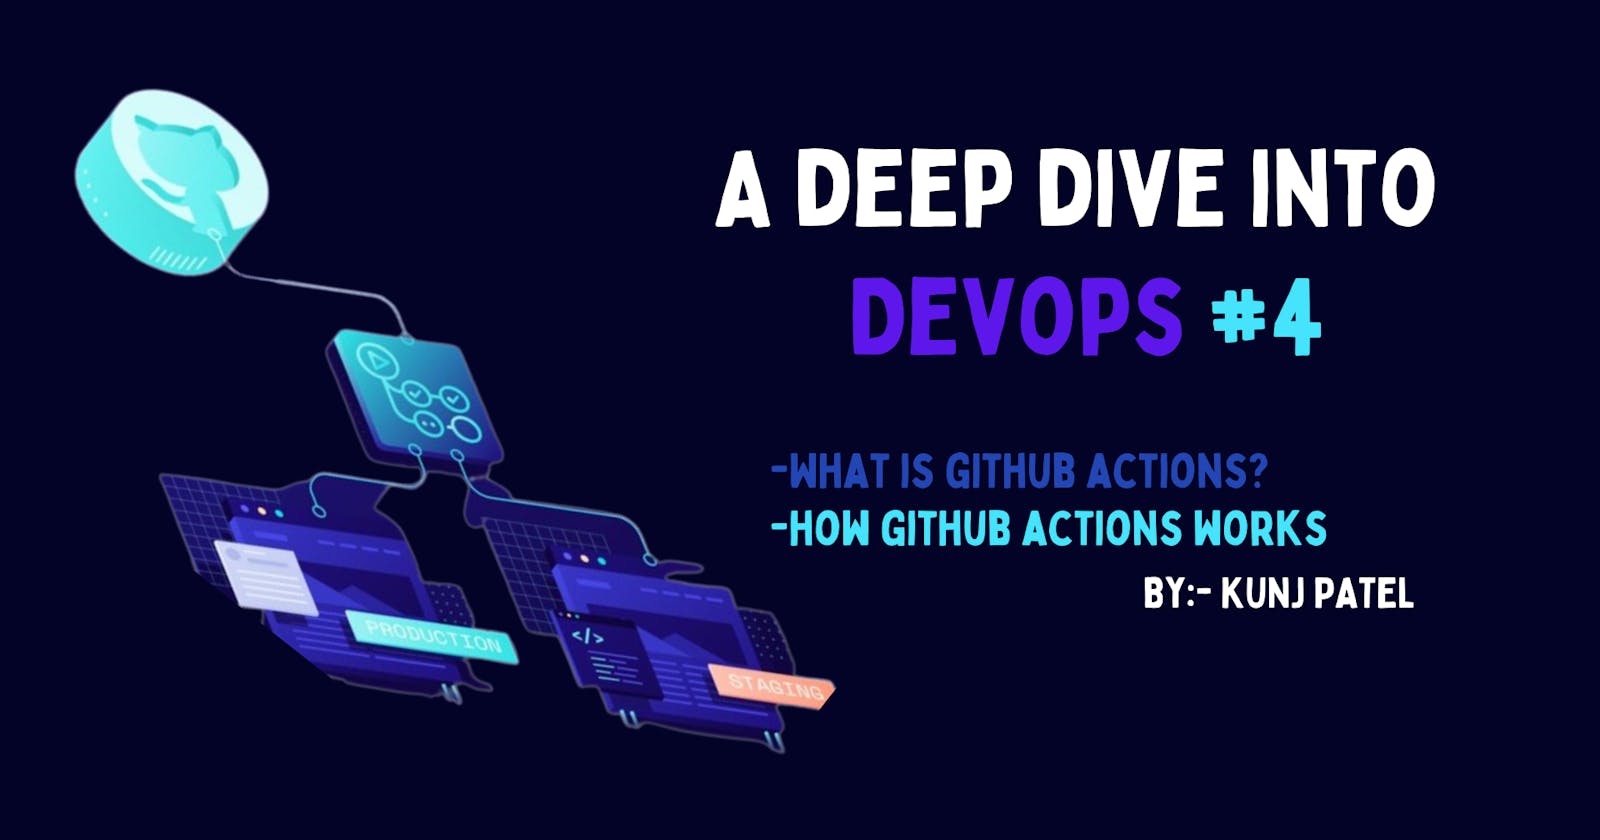 A Deep dive into DevOps #4